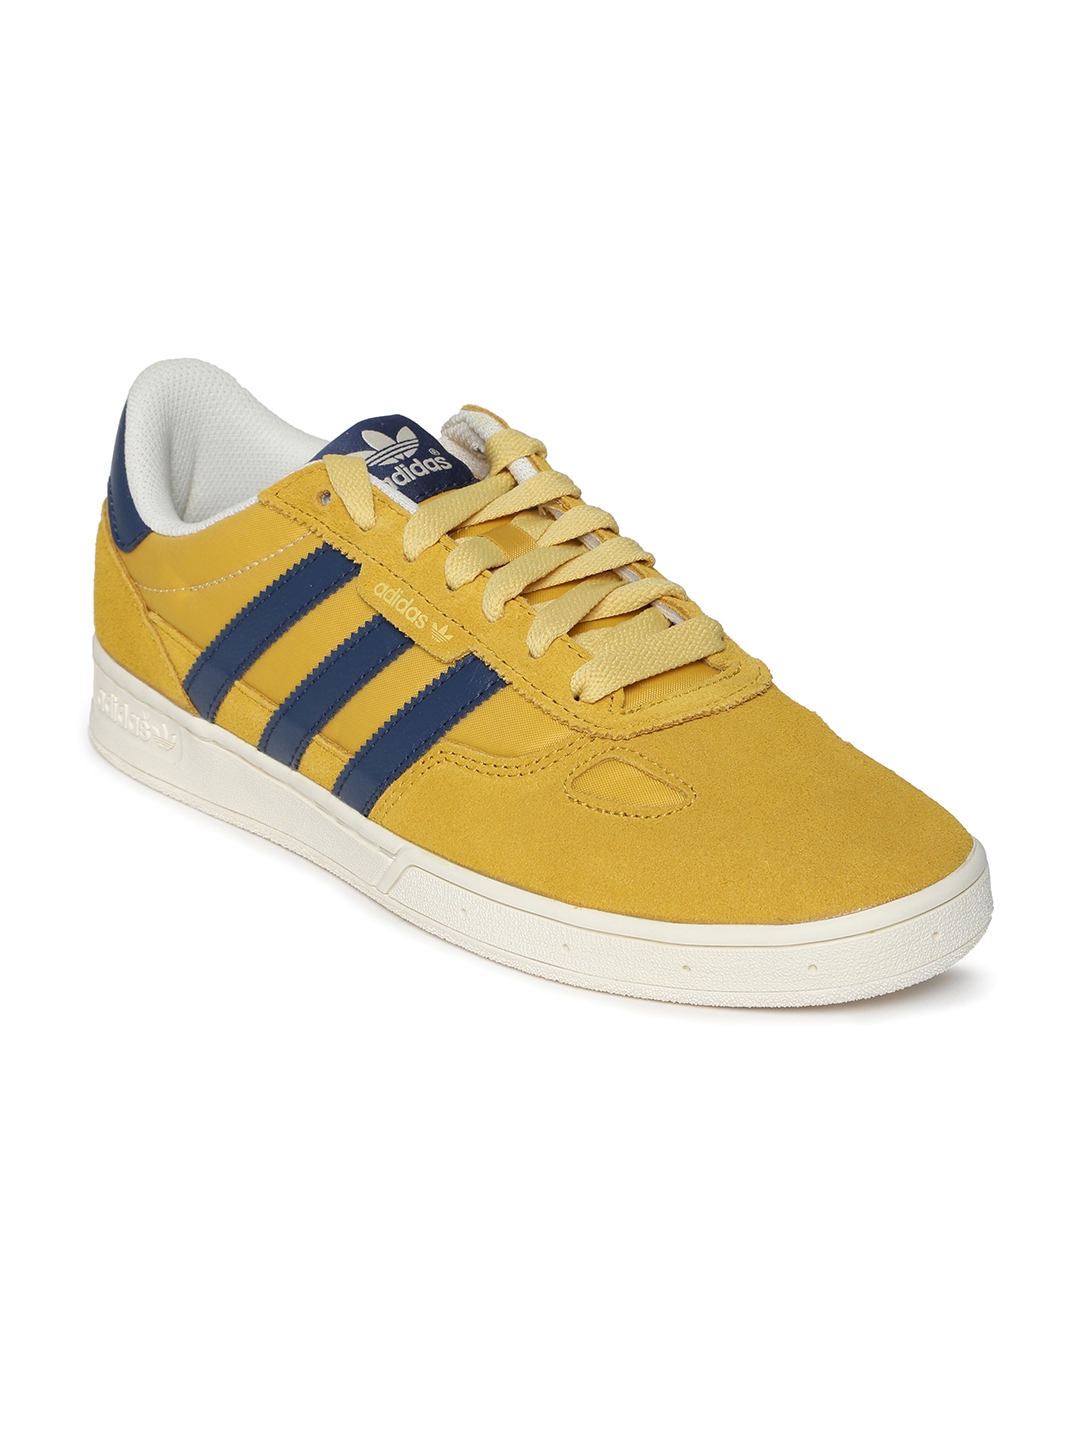 Adidas Originals Men Mustard Yellow Ciero Casual Shoes 1 82d5b7ee531009846a92bd1c05caa8b9 